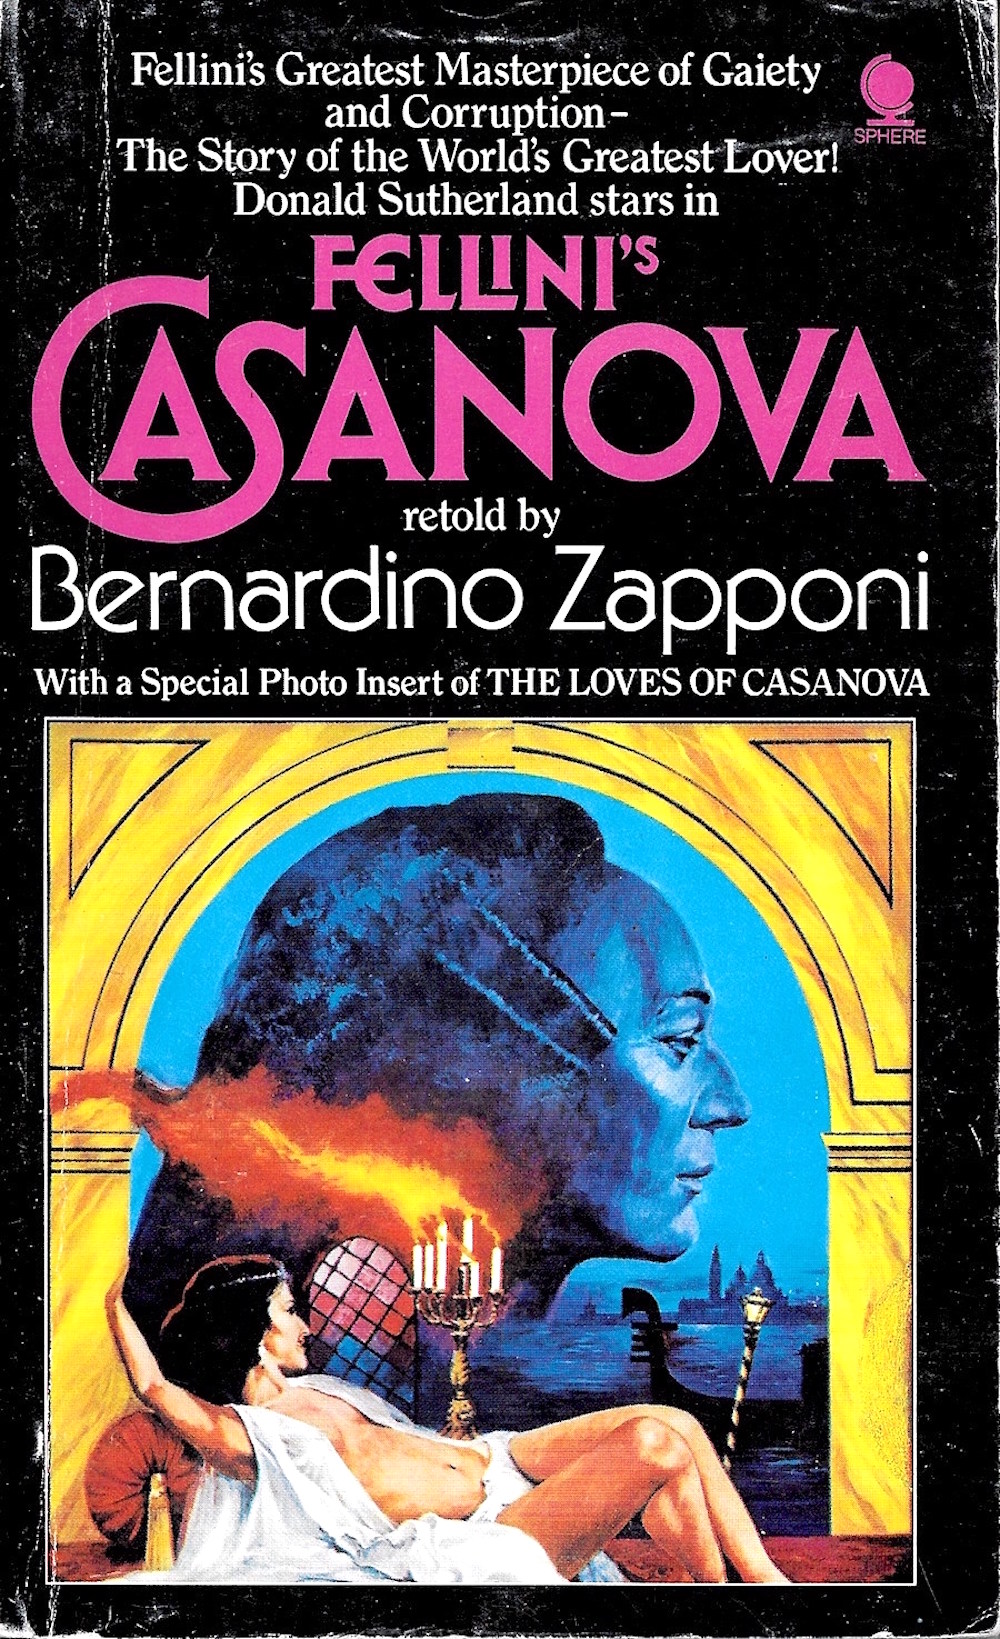 Fellini's Casanova, book, film Donald Sutherland